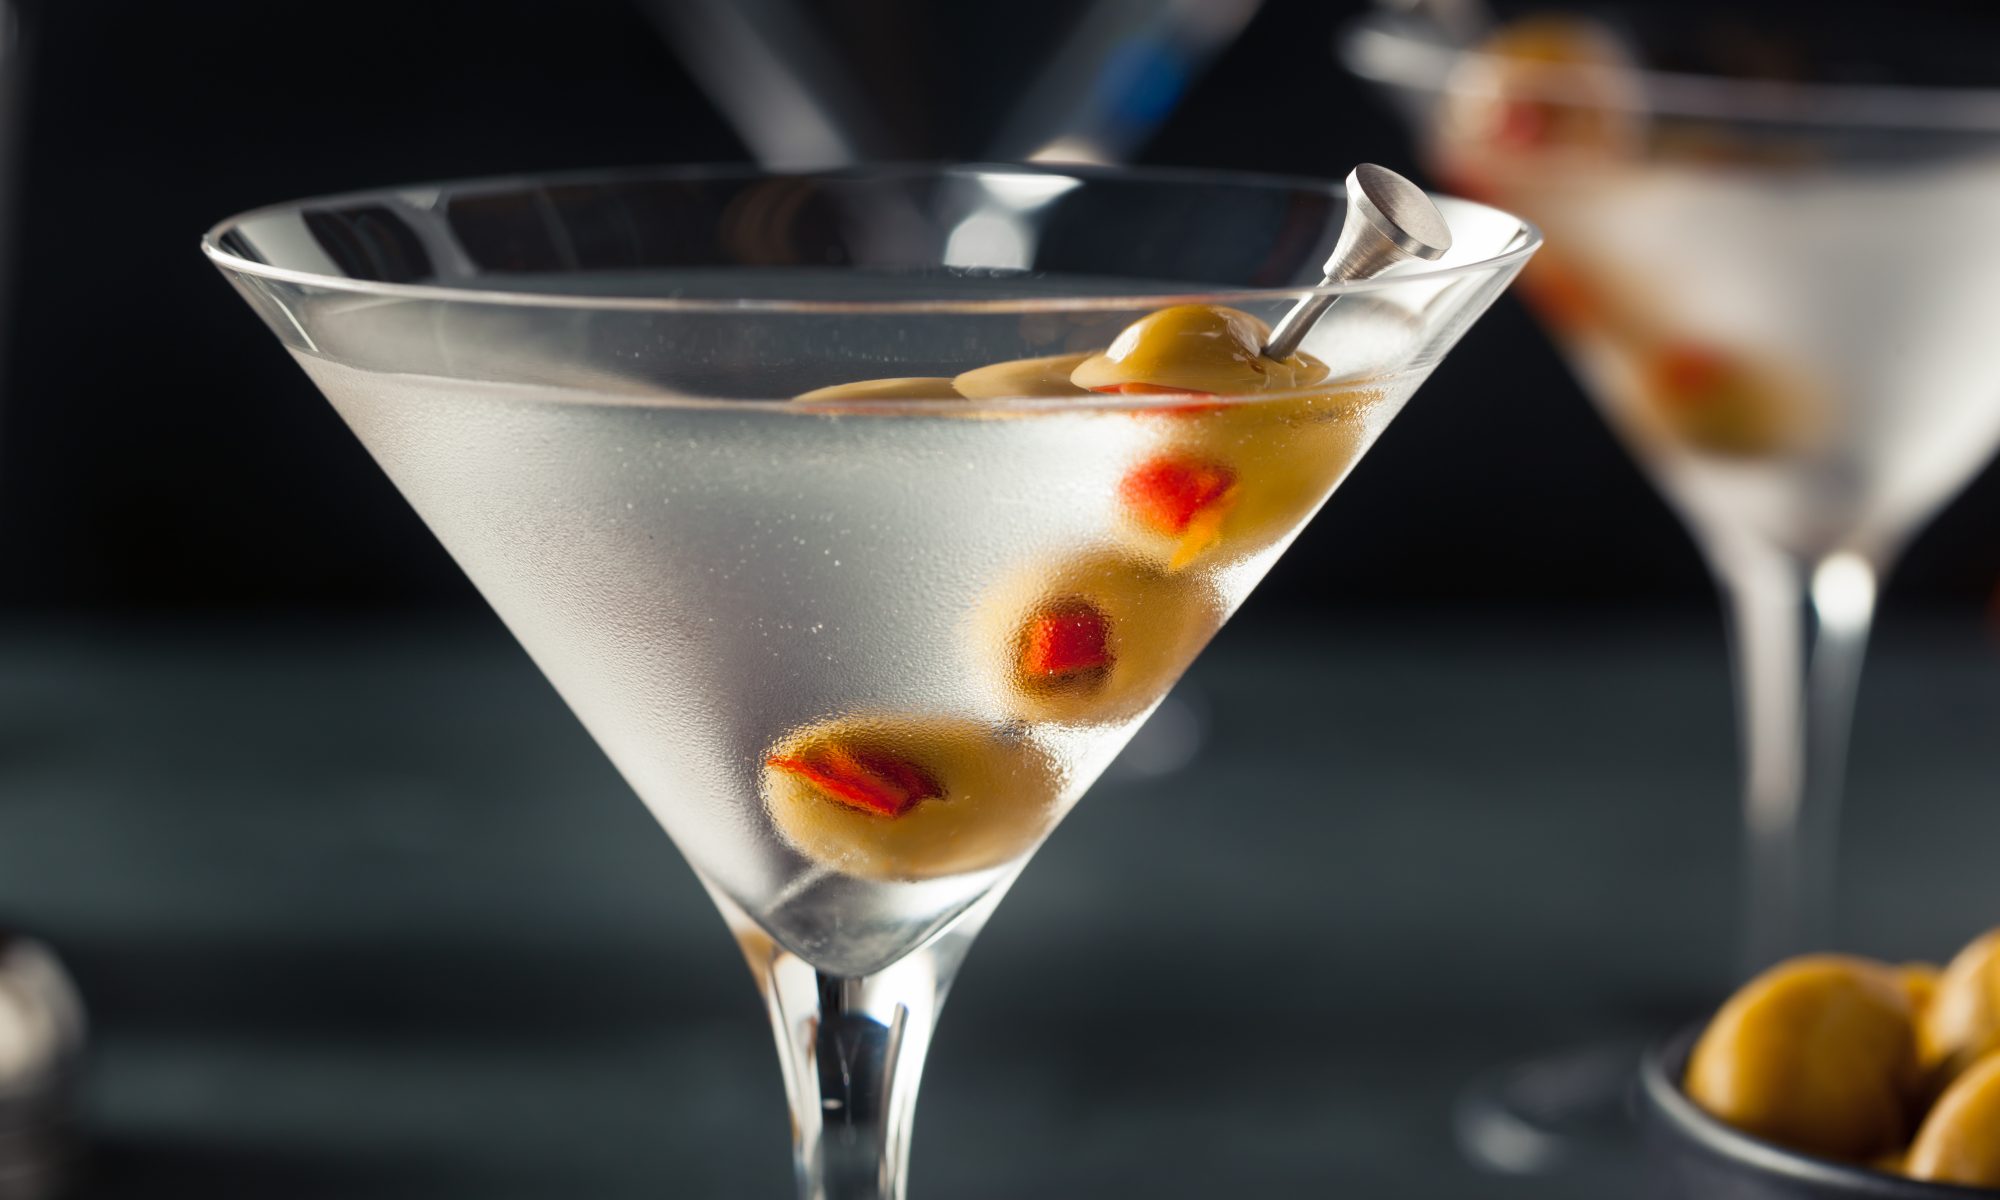 Classic shaken dry vodka martini